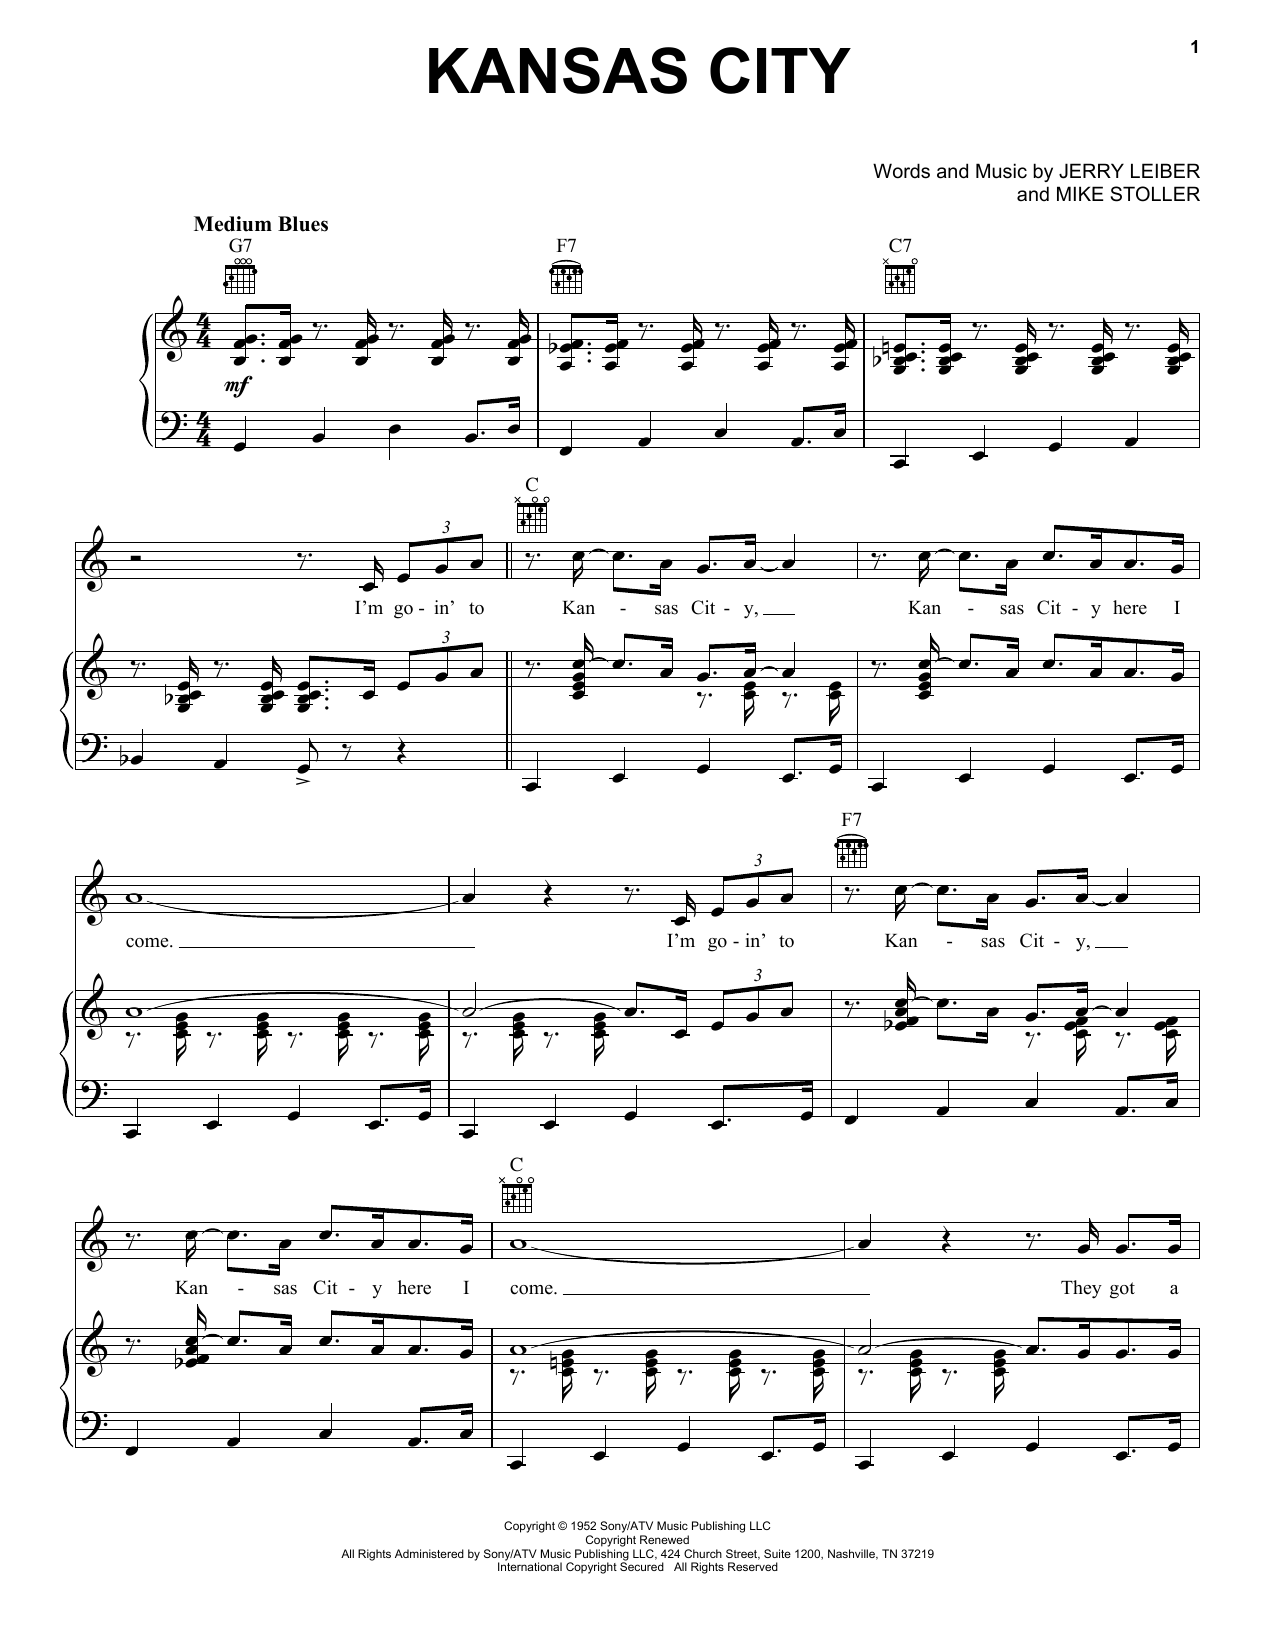 Wilbert Harrison Kansas City Sheet Music Notes & Chords for Ukulele with strumming patterns - Download or Print PDF